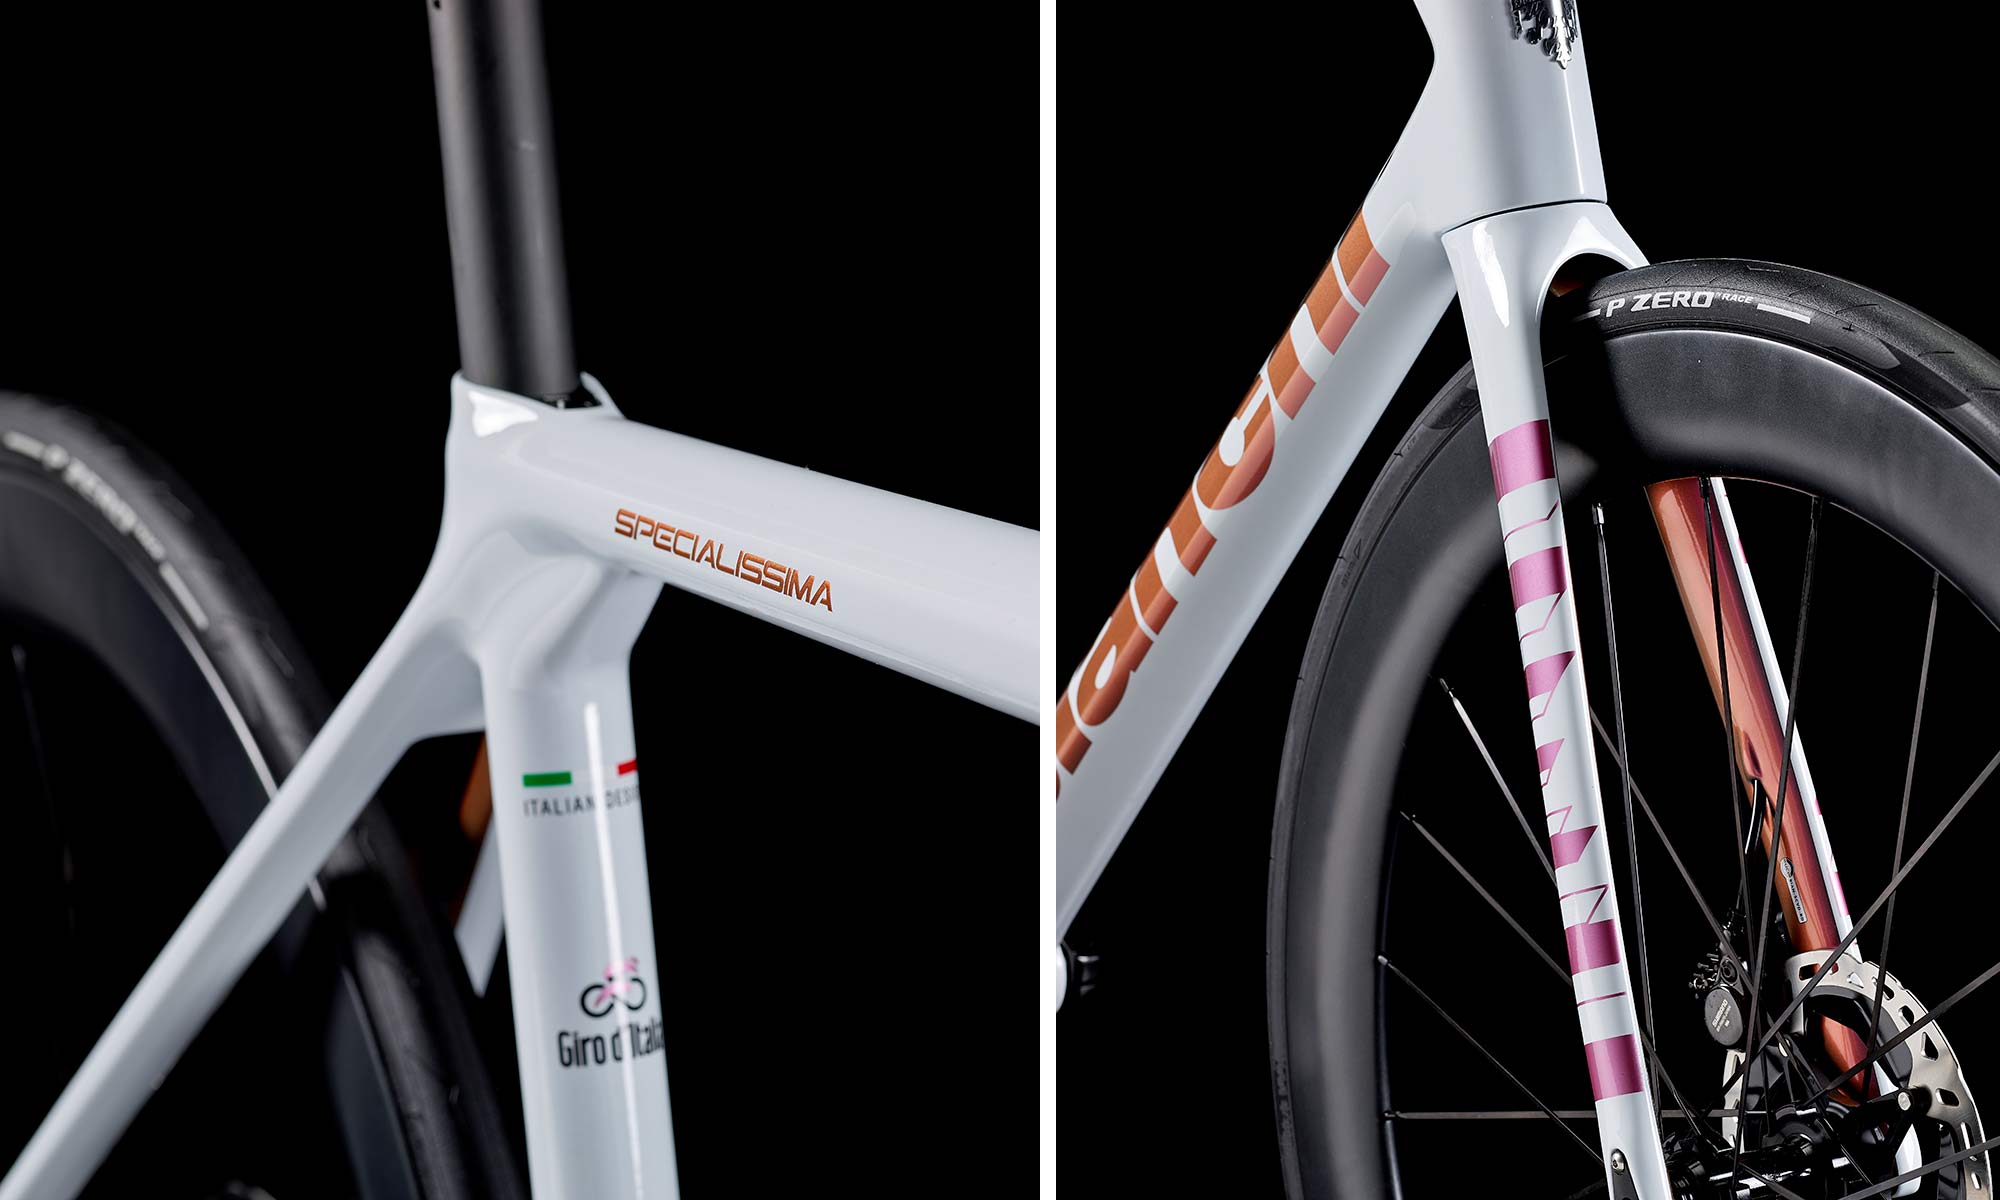 2022 Bianchi Specialissima Giro105 limited edition 105th anniversary Giro dItalia lightweight carbon road racing bike, details